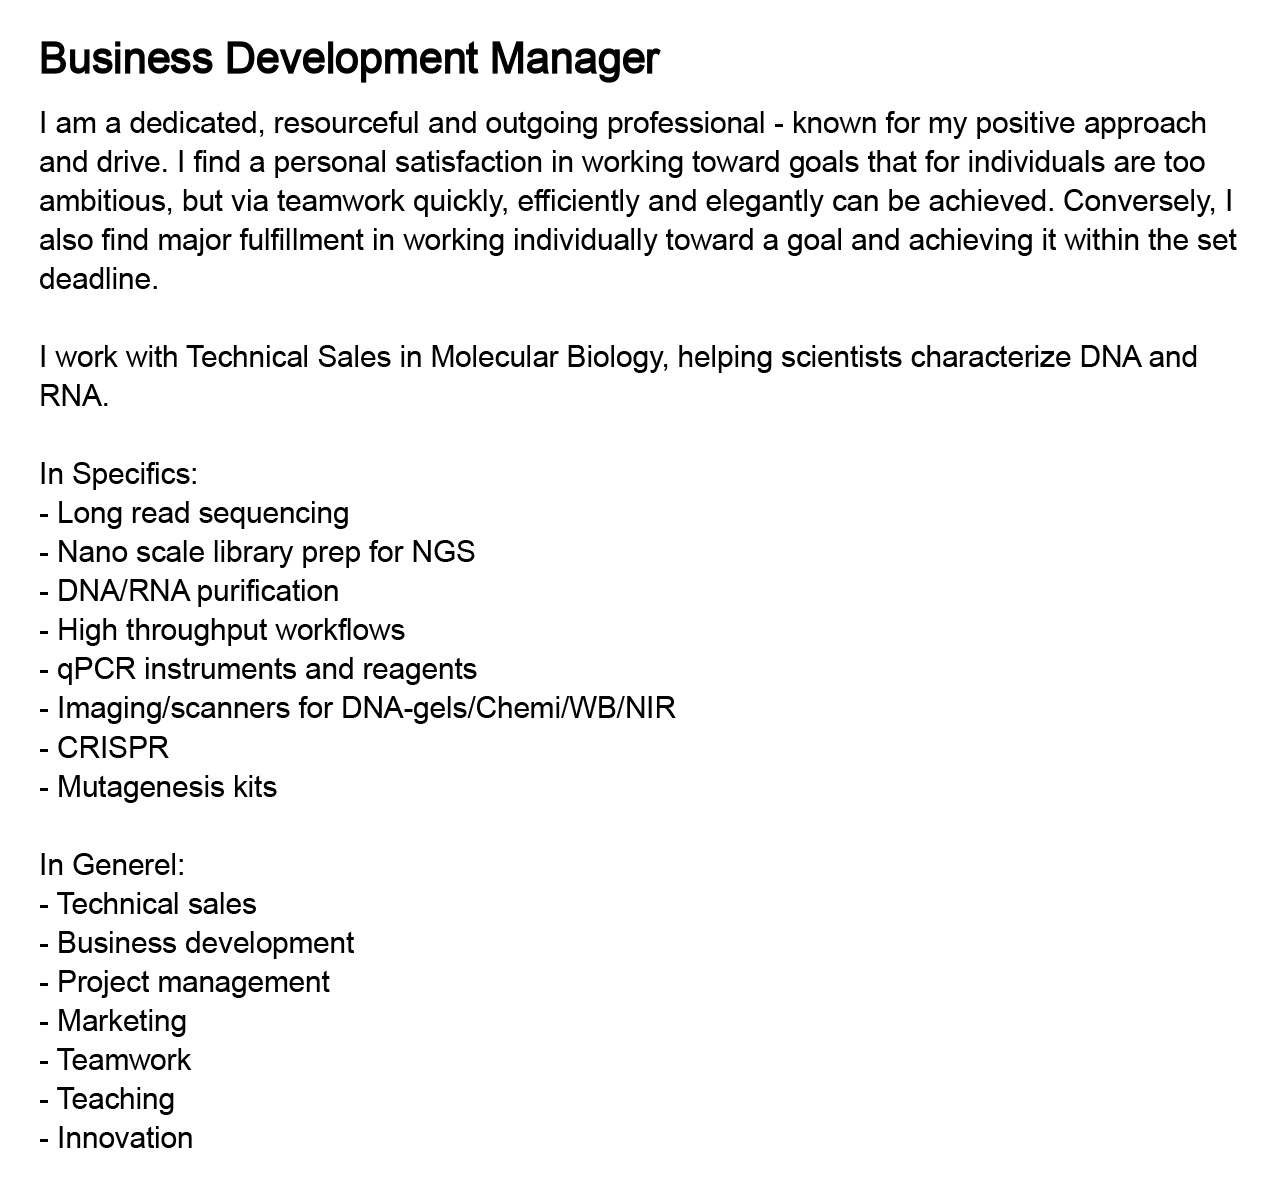 Business Development Manager LinkedIn summary example